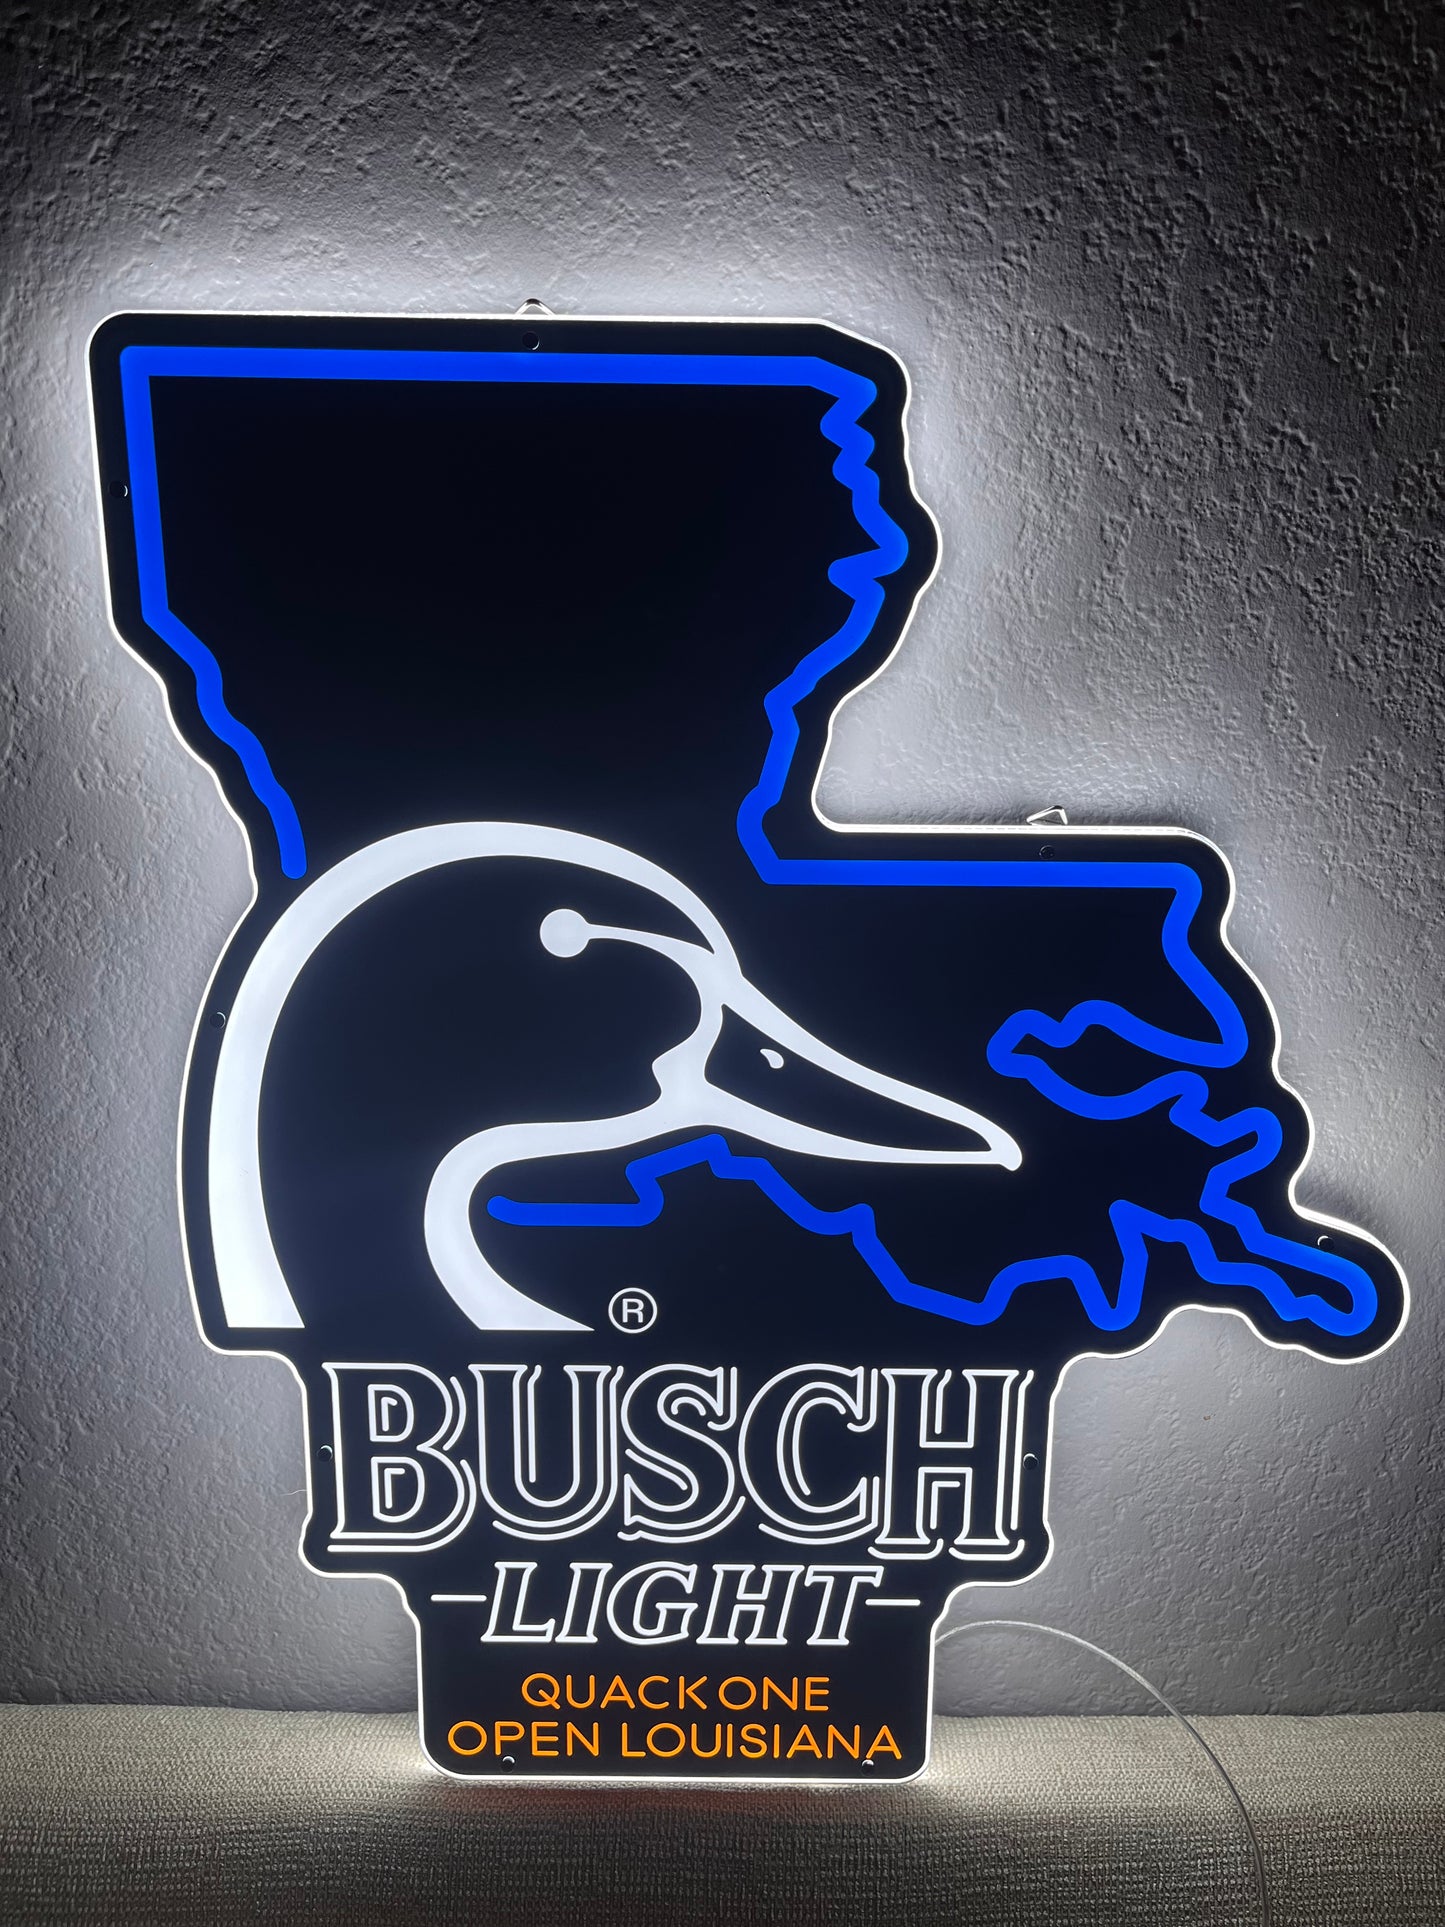 Louisiana Ducks Unlimited Busch Sign